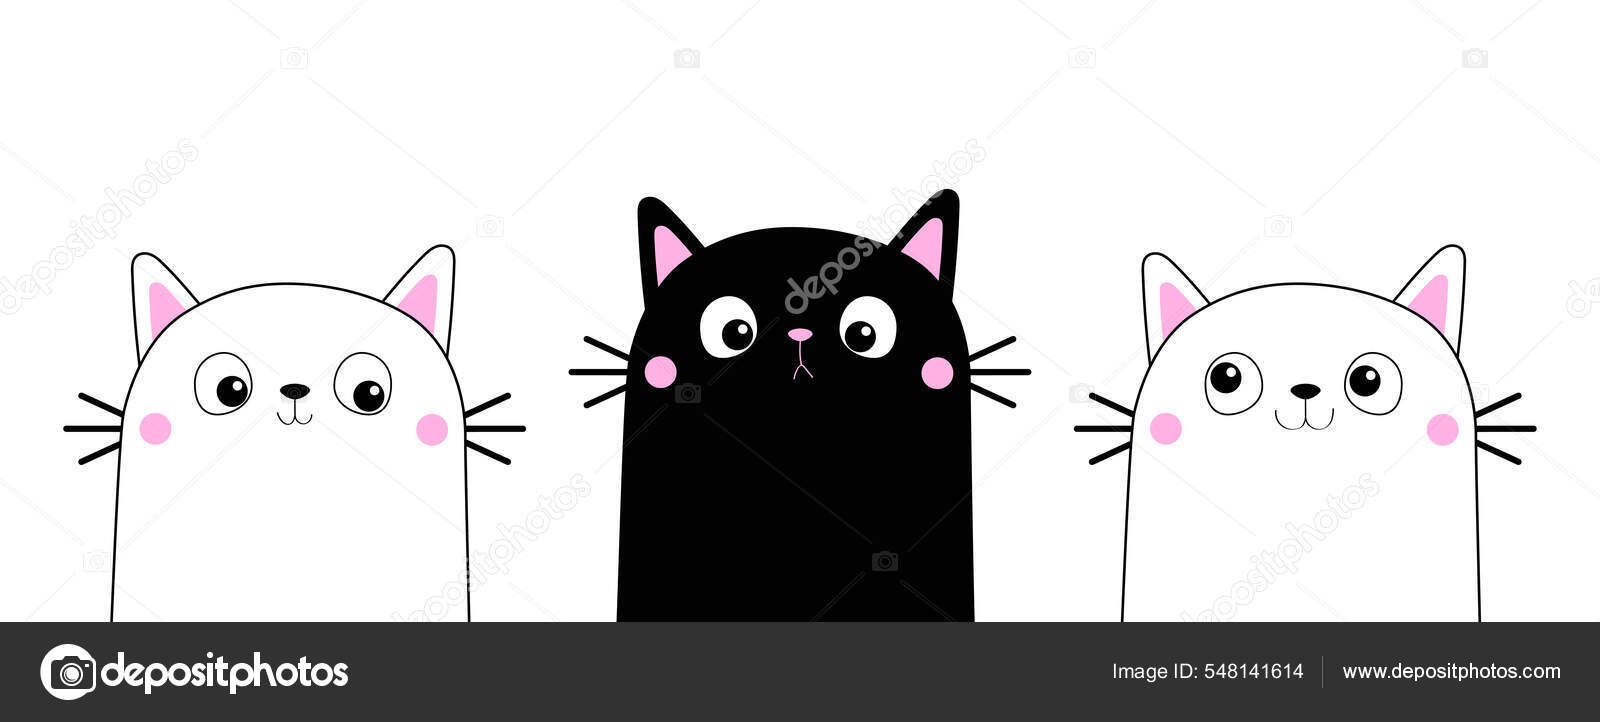 Black white cat icon set. Cute kawaii cartoon character. Funny